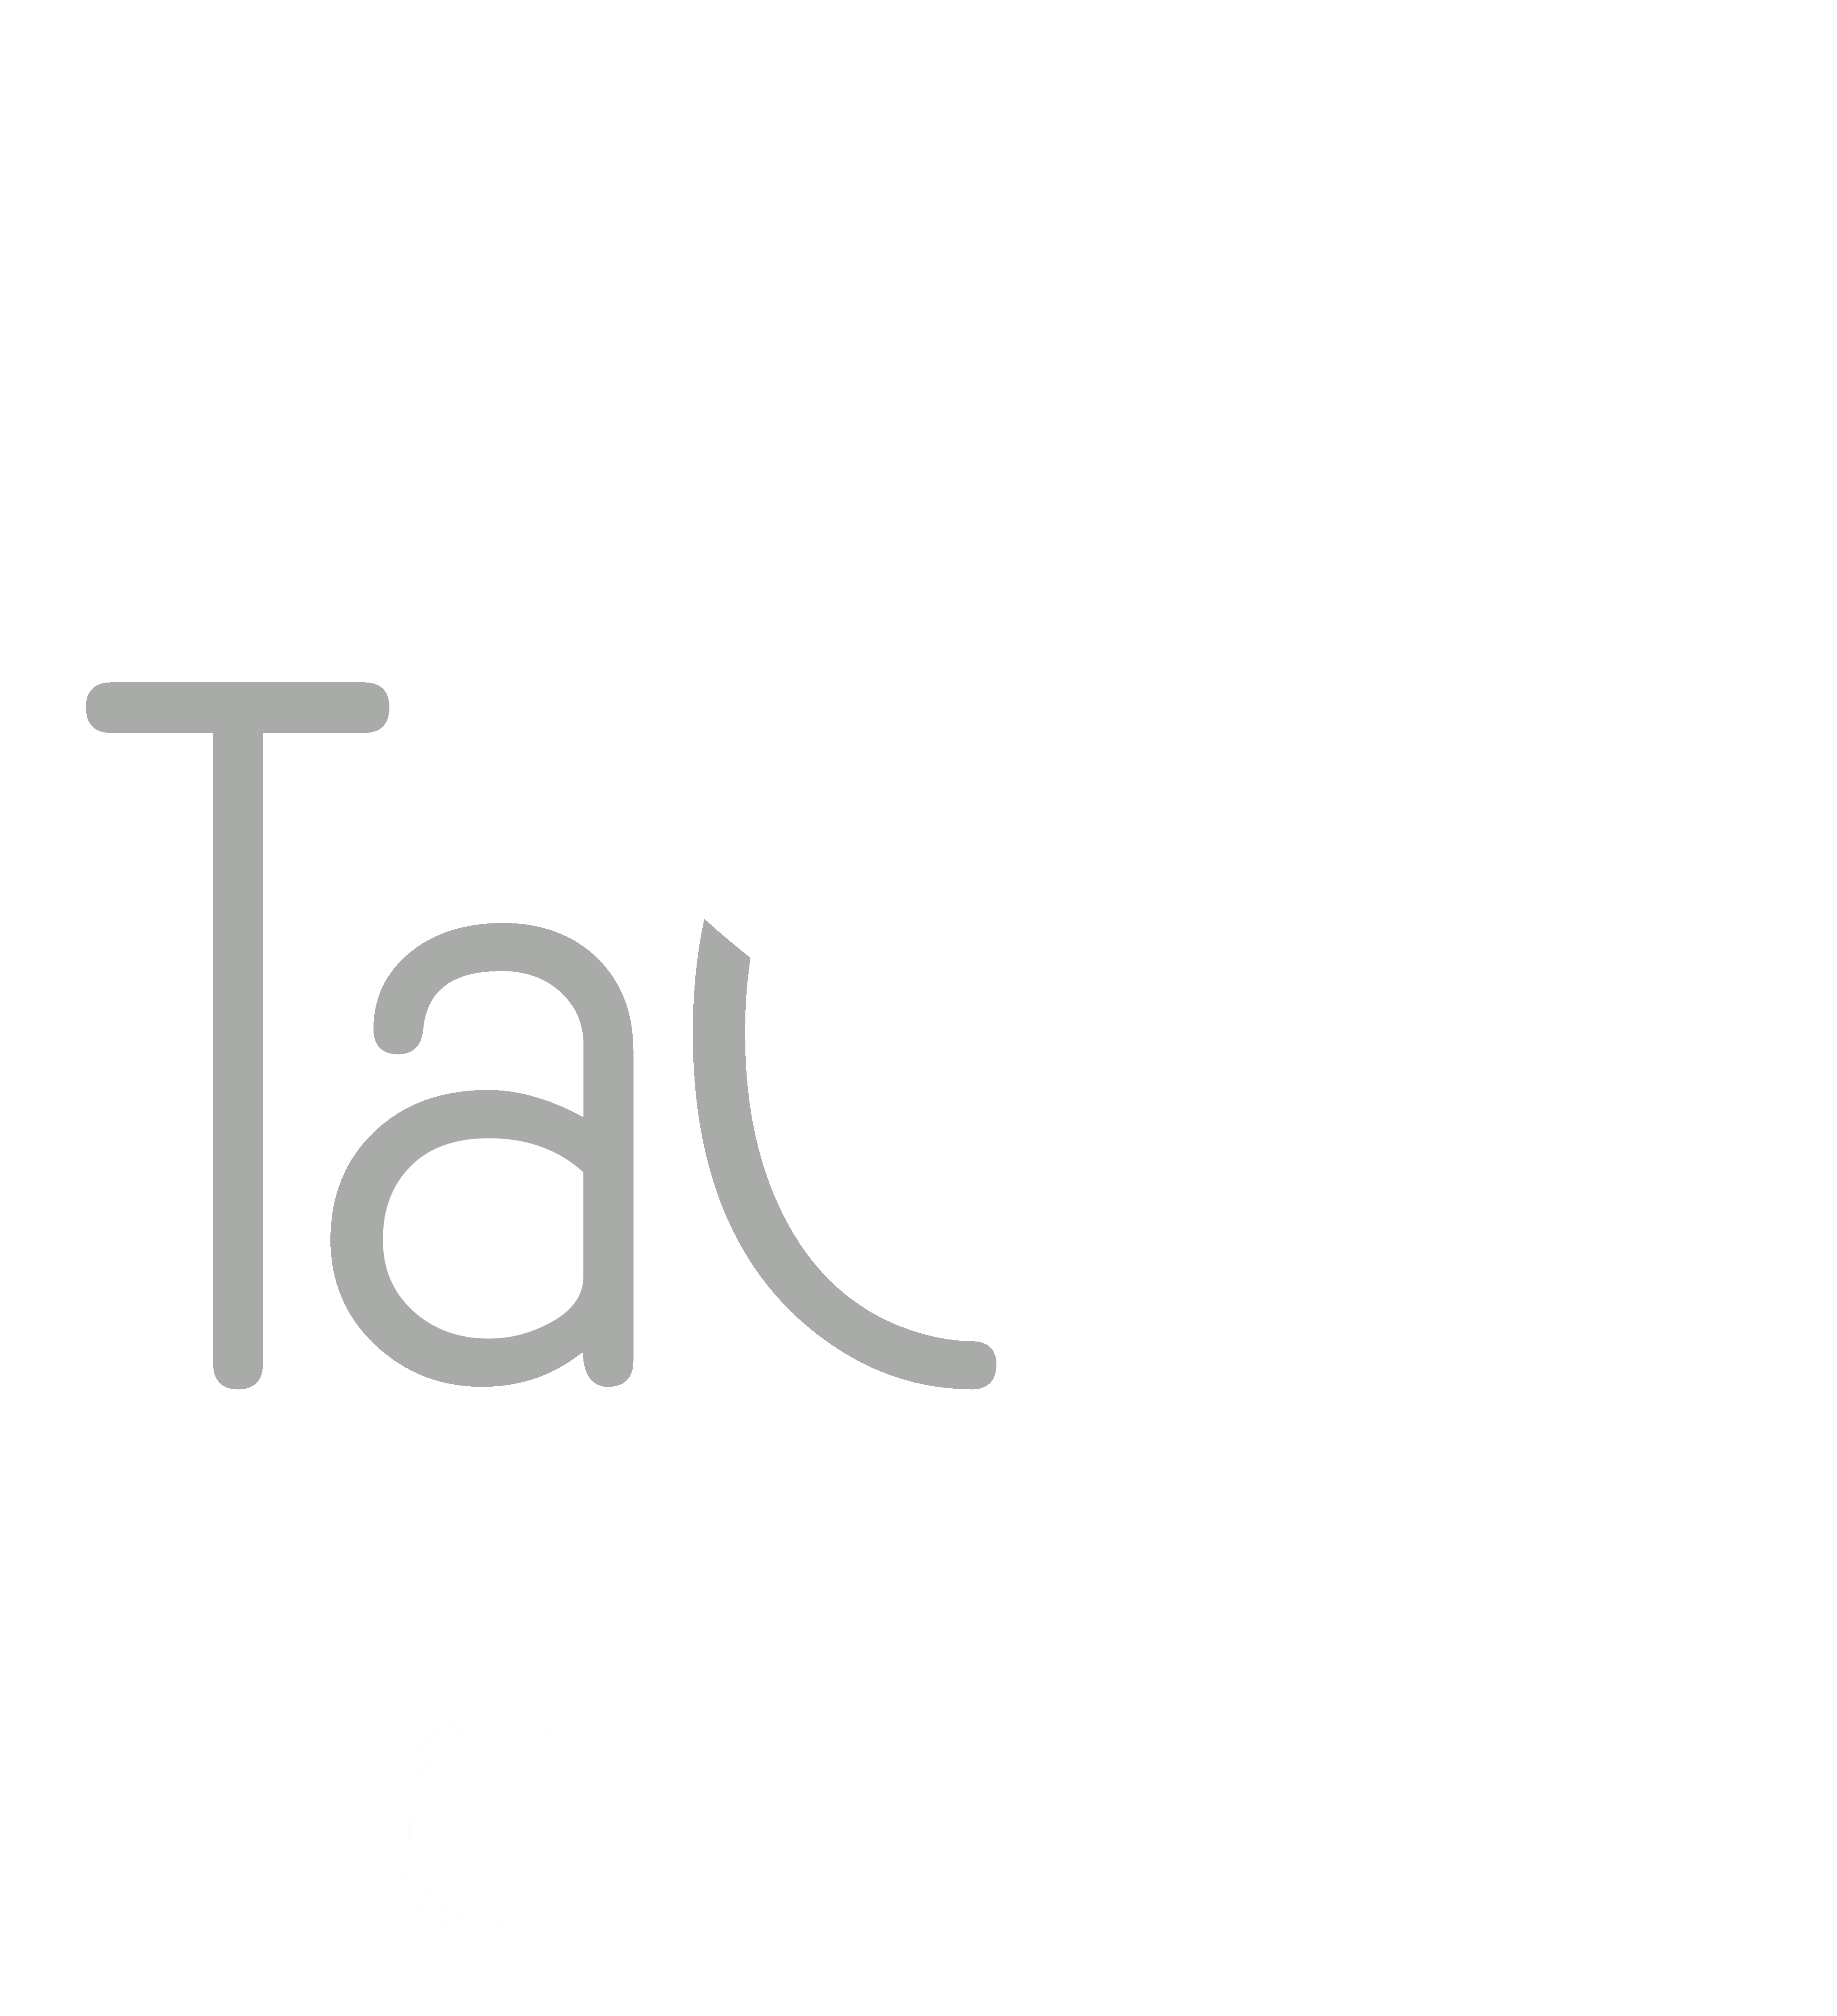 TaC Architects